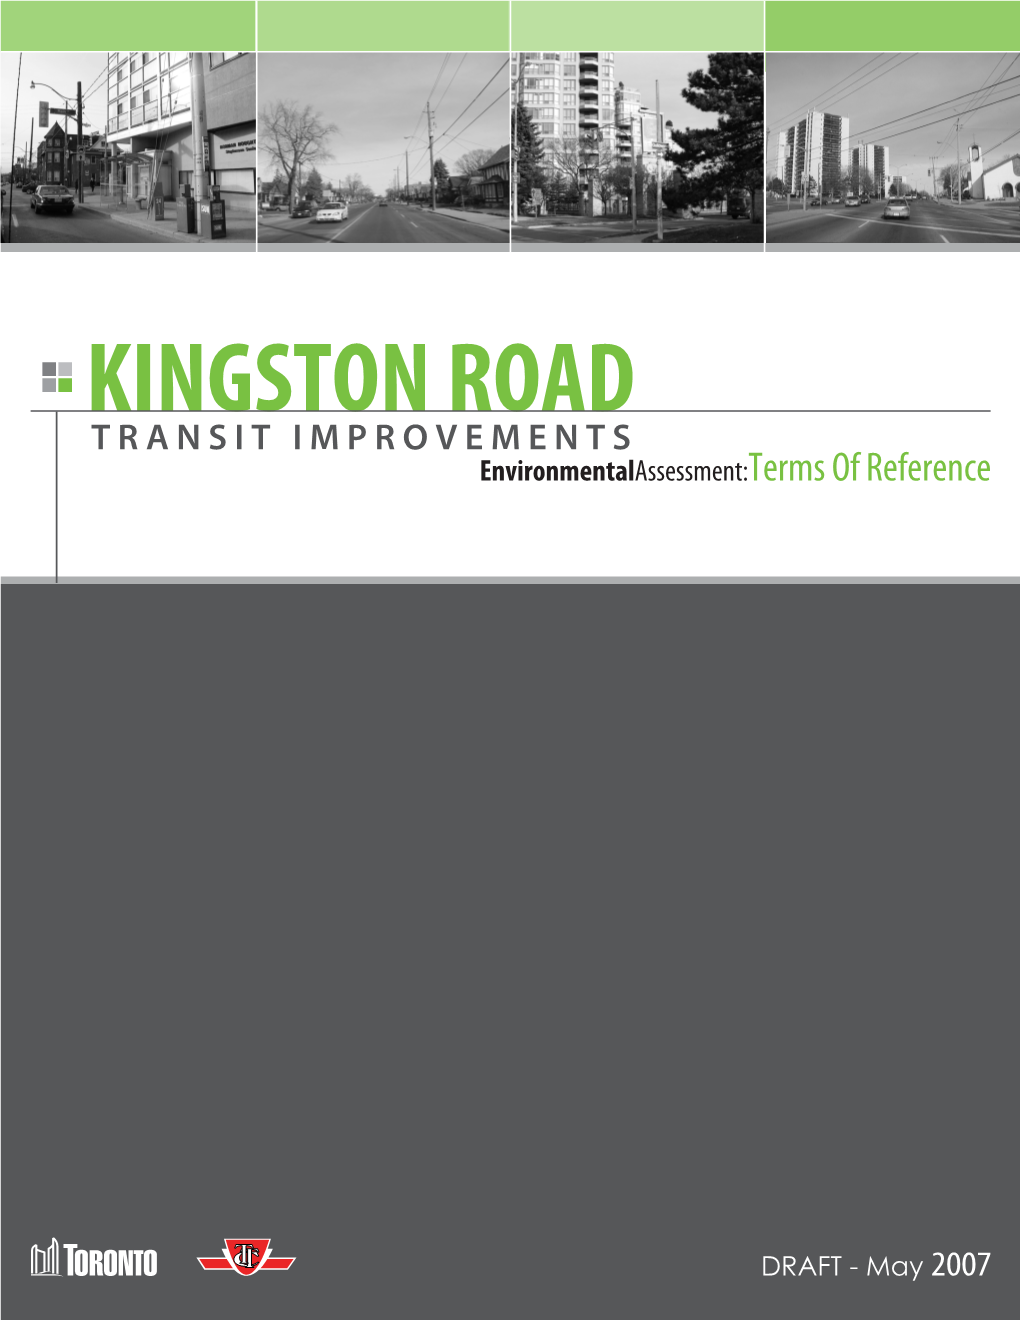 KINGSTON ROAD TRANSIT IMPROVEMENTS Environmentalassessment:Terms of Reference